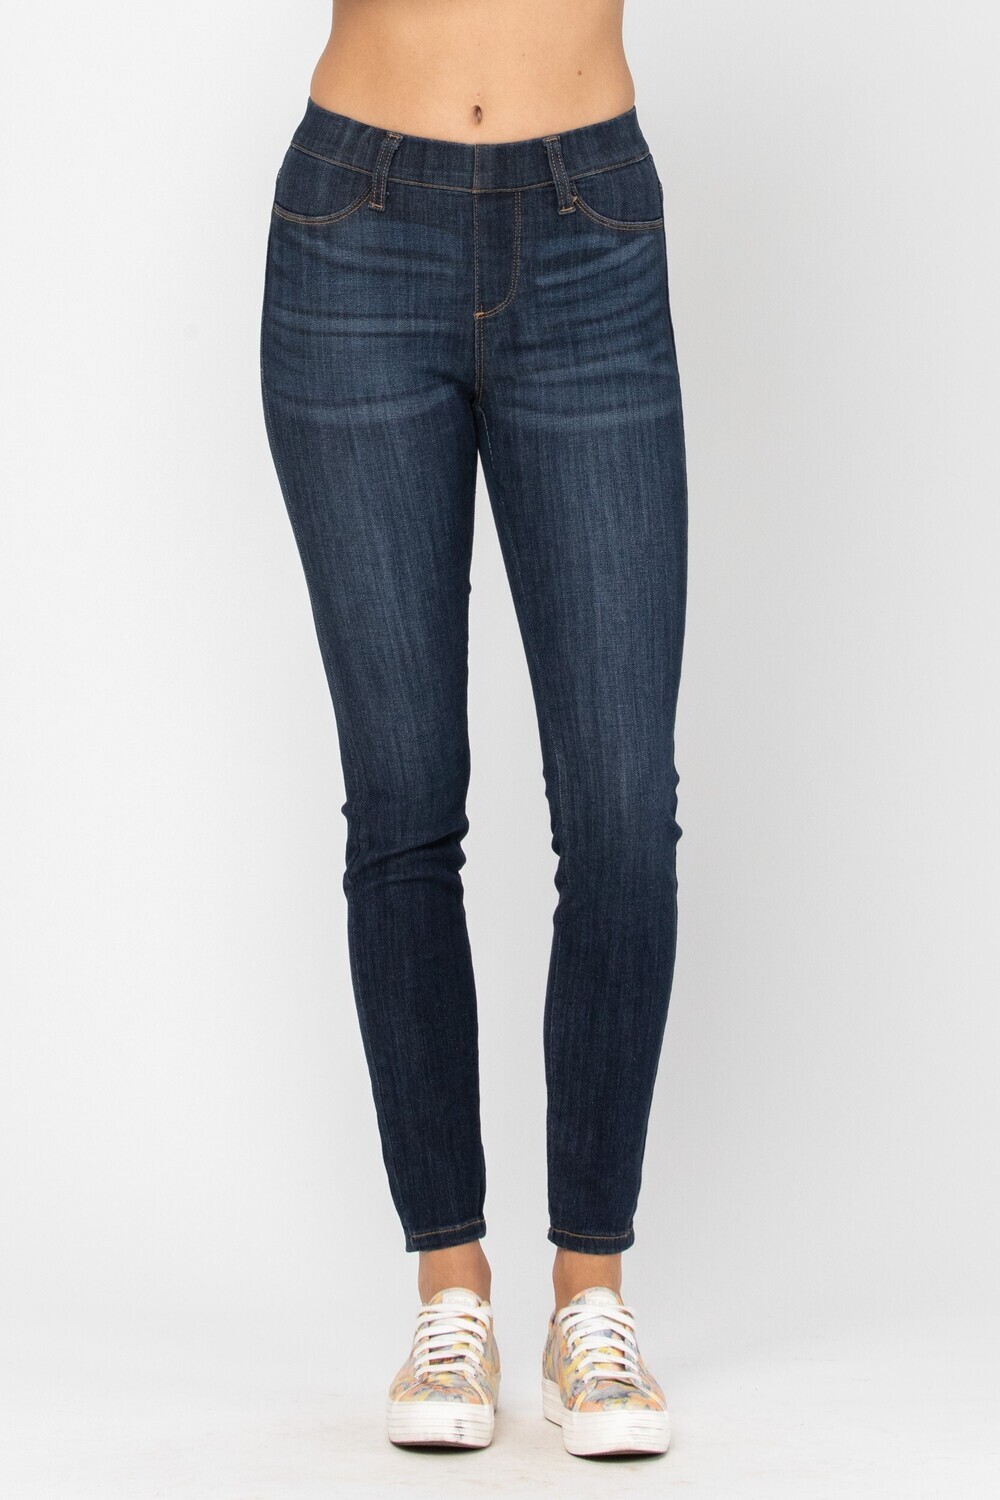 Kayla Dark Wash Mid-Rise Pull-On Skinny Jean